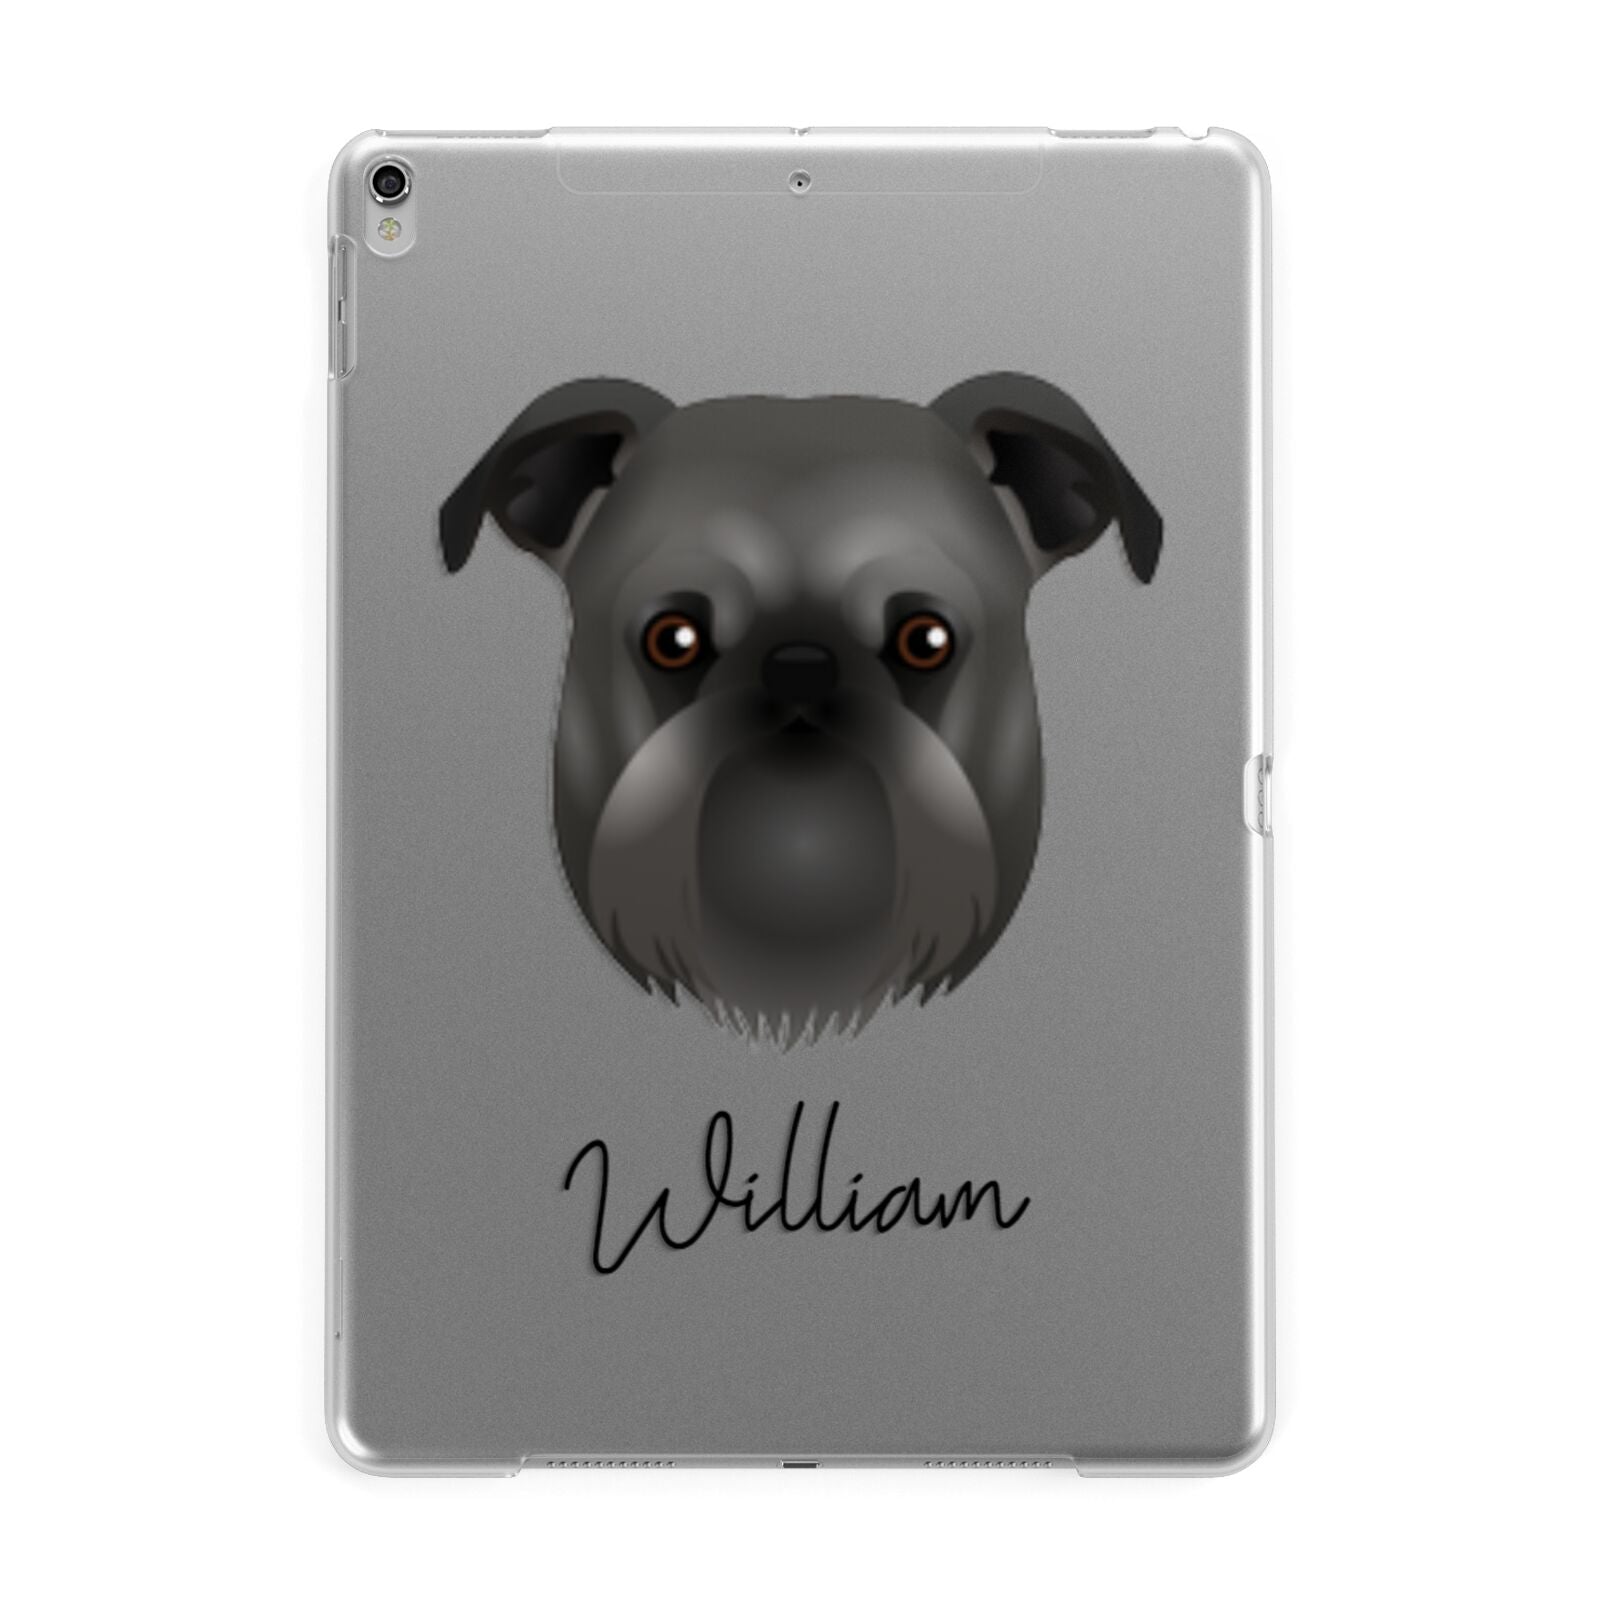 Griffon Bruxellois Personalised Apple iPad Silver Case